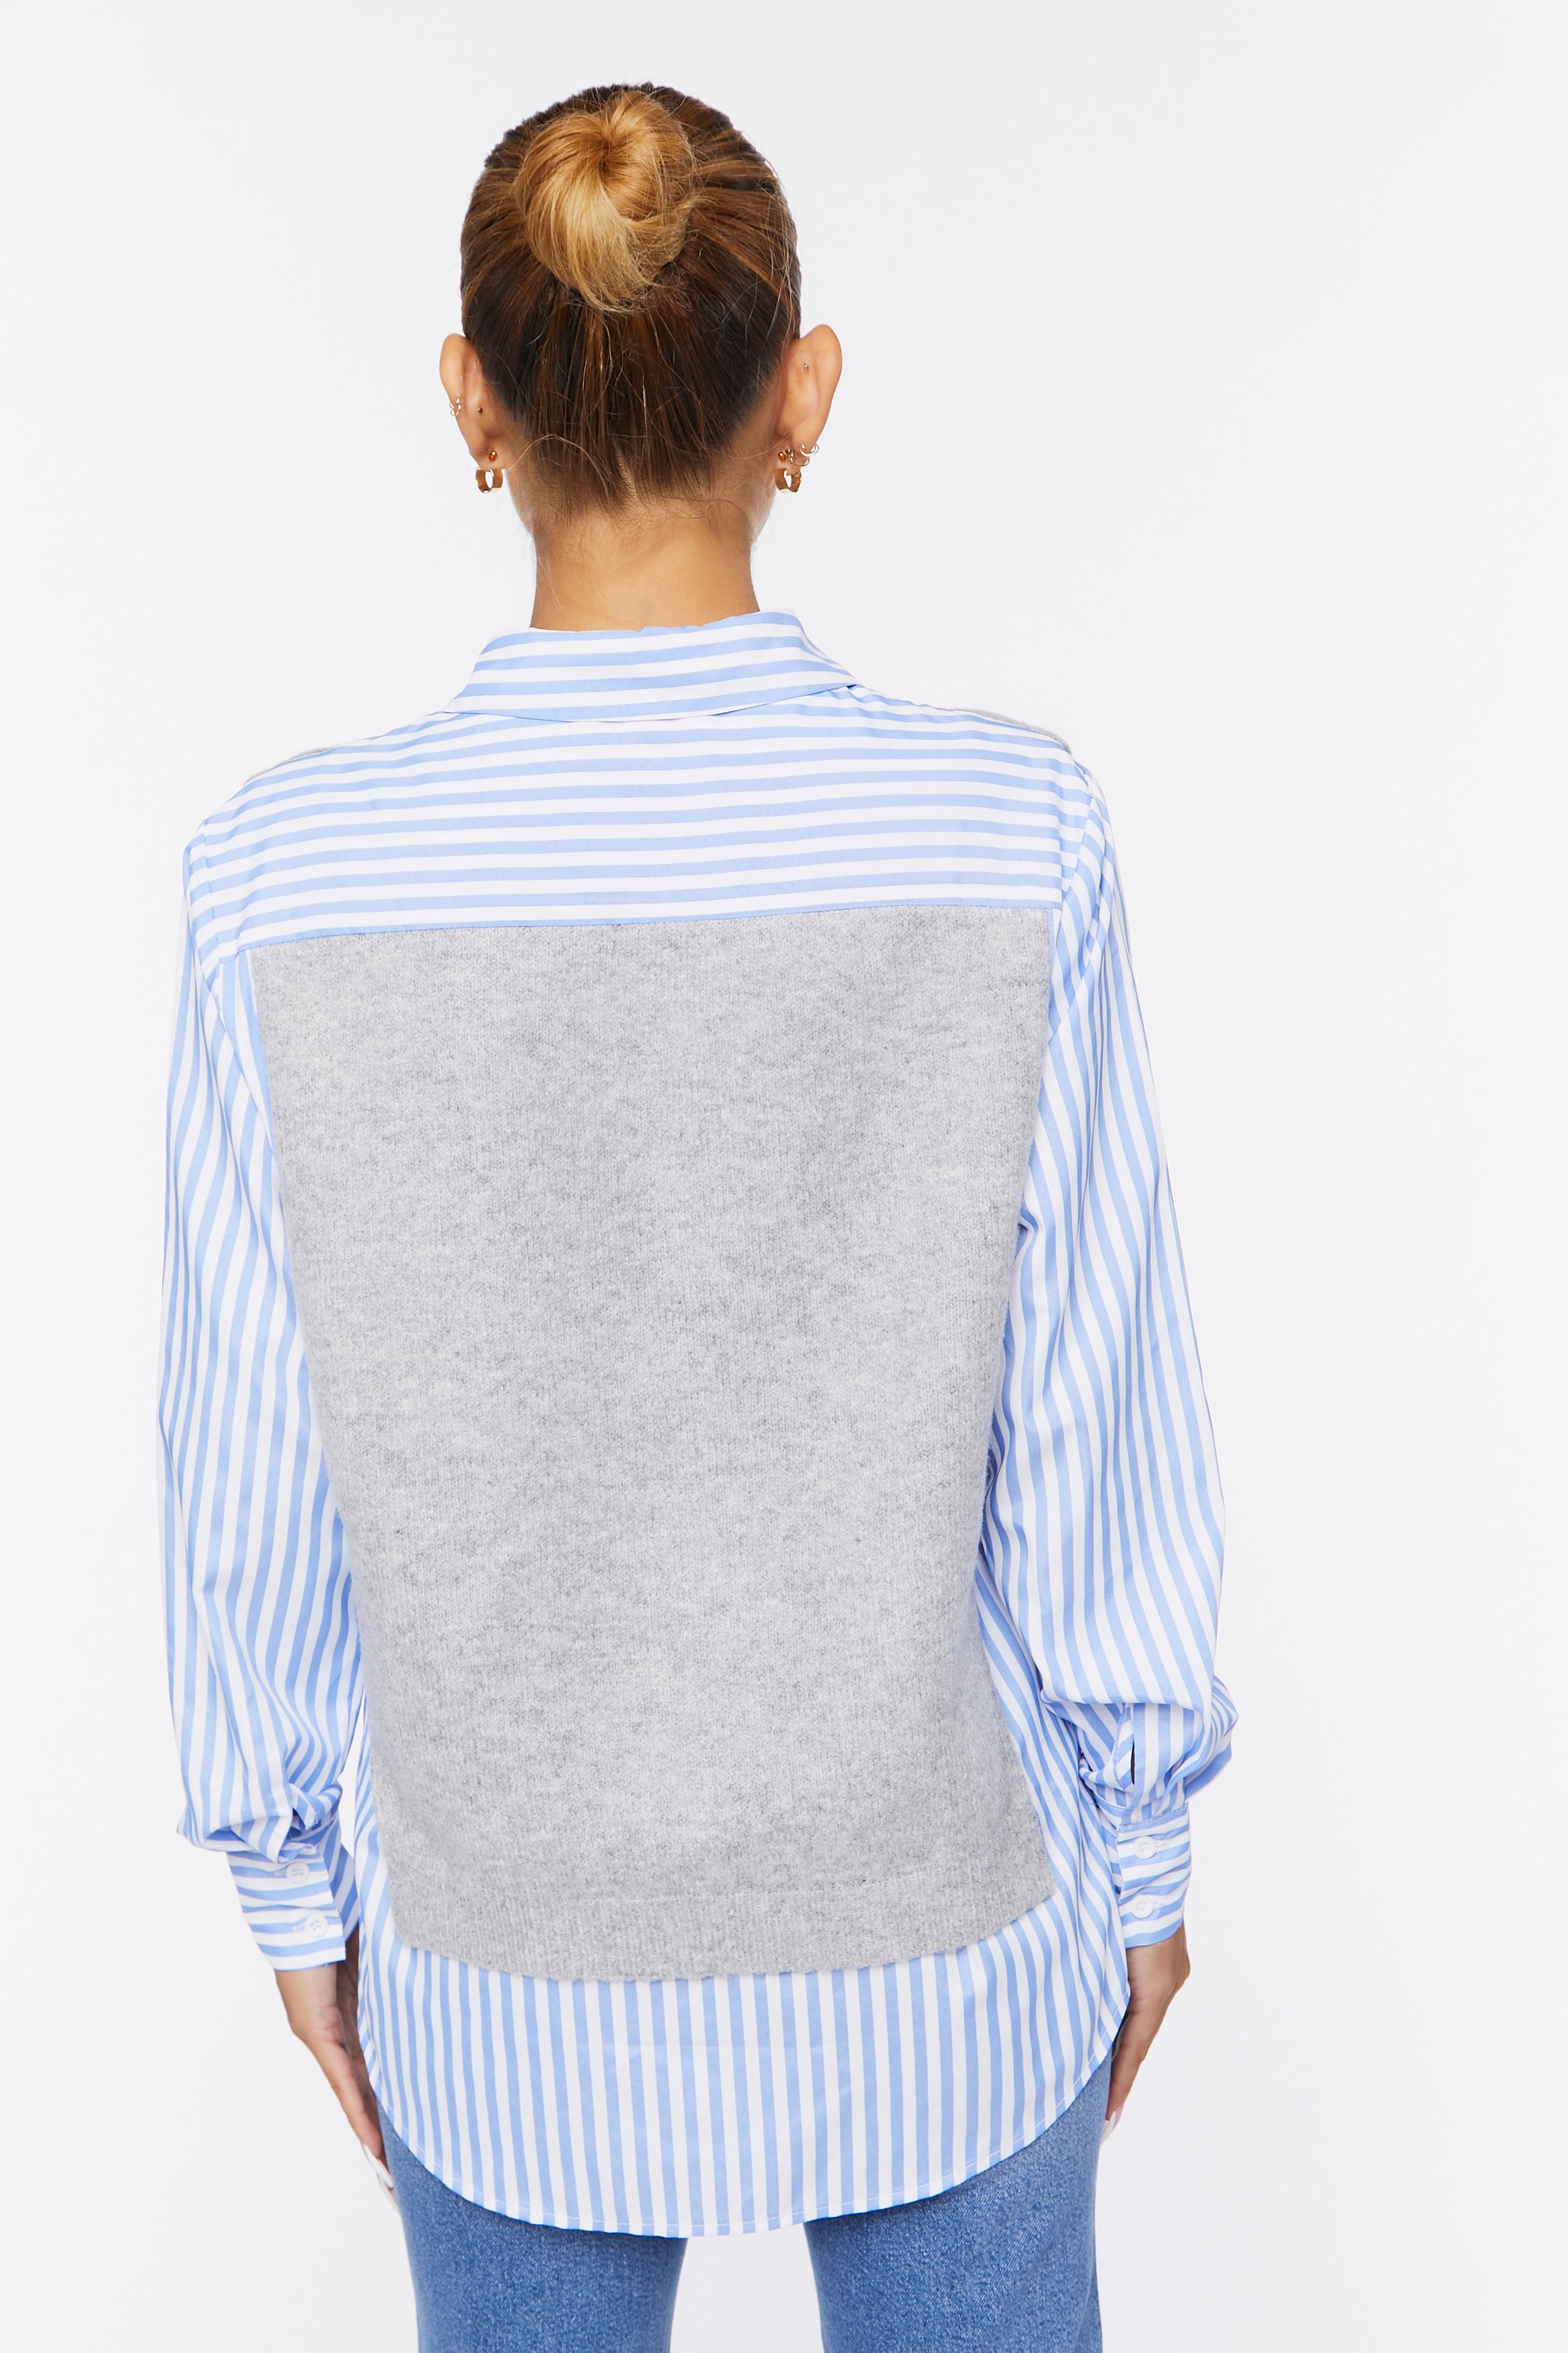 Greymulti Sweater Vest Combo Shirt 3